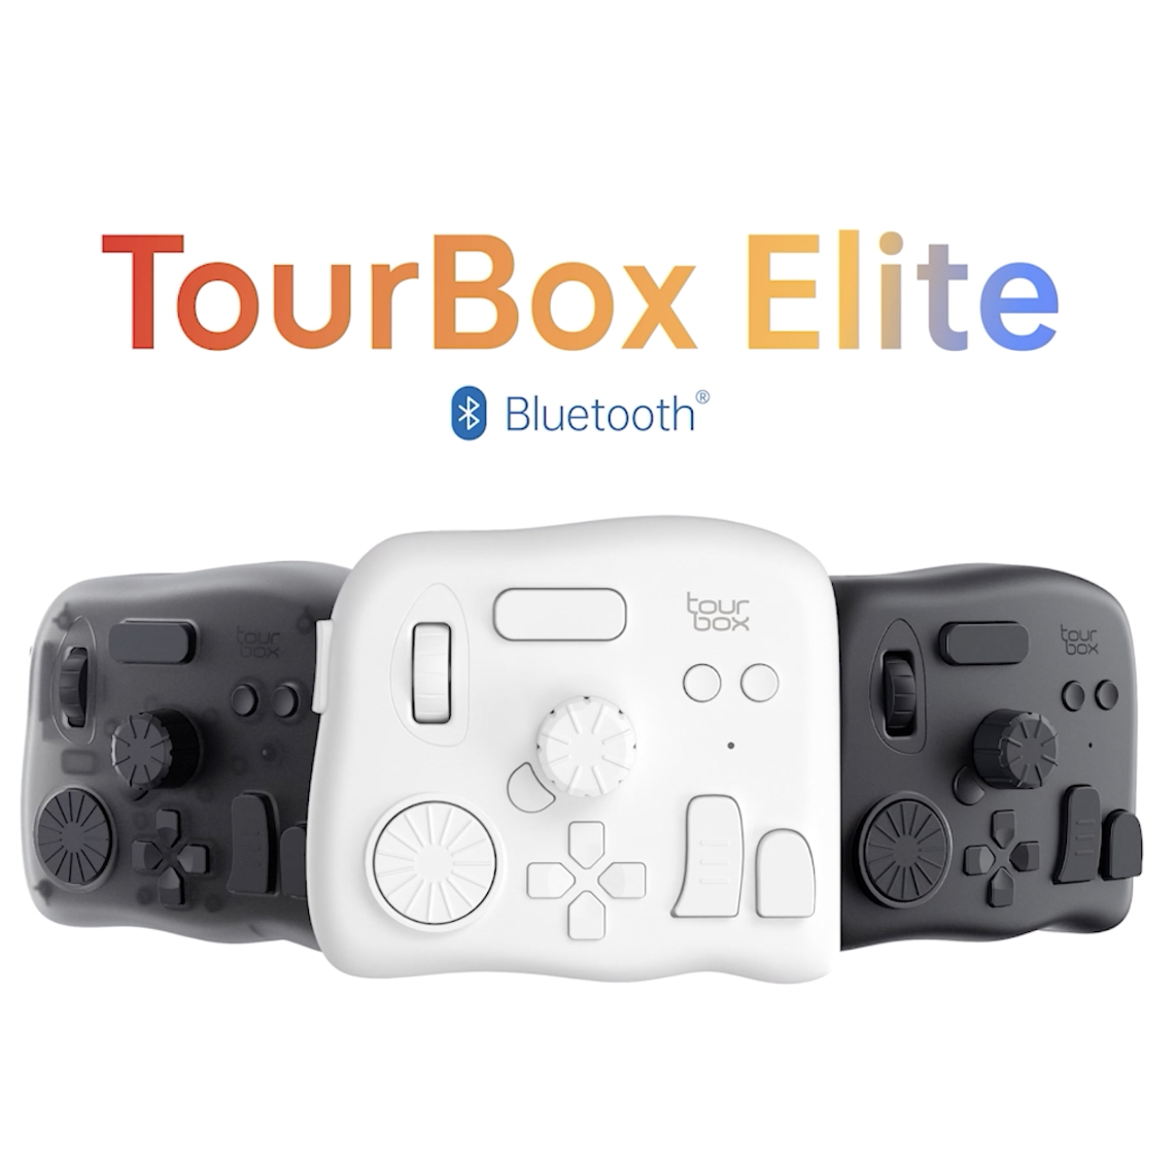 TourBox Elite クリエイターの究極 Bluetoothコントローラー